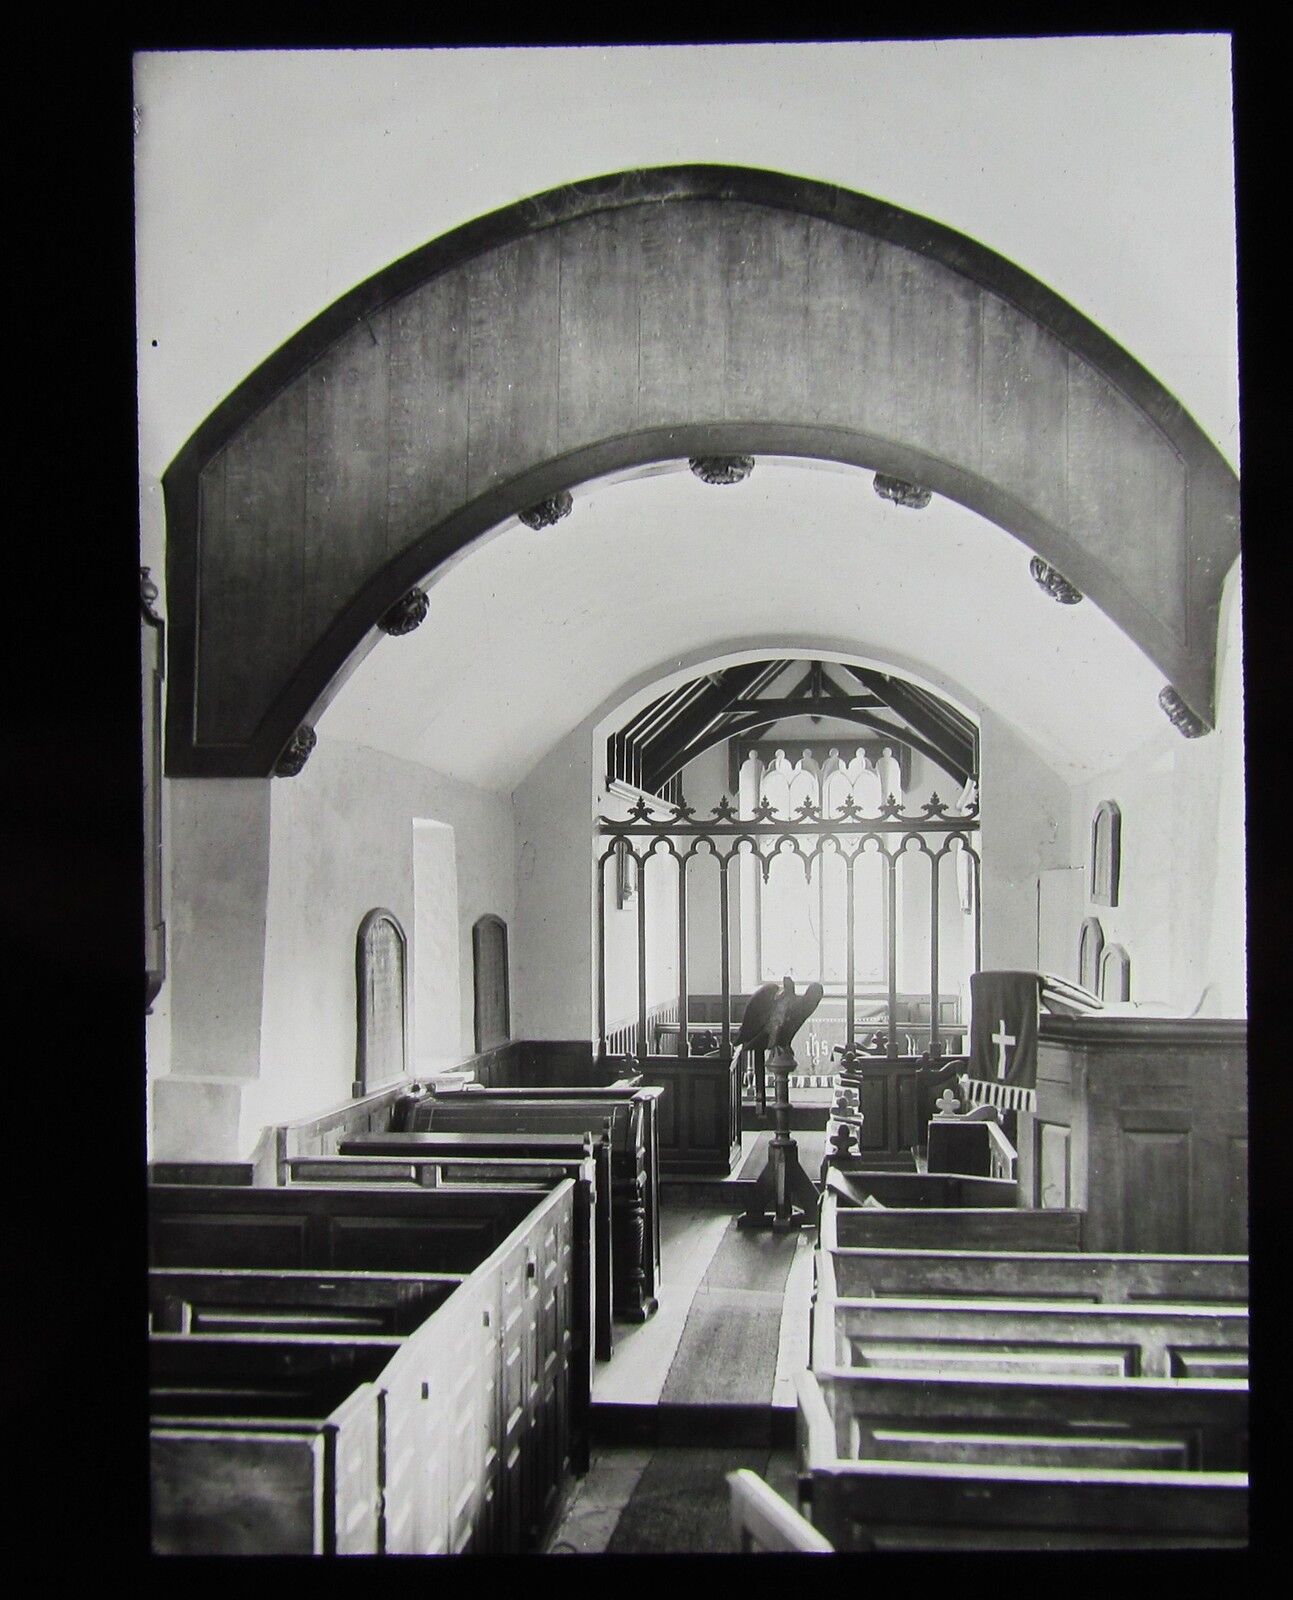 Glass Magic Lantern Slide INTERIOR OF OARE CHURCH DATED 1910 KENT ENGLAND